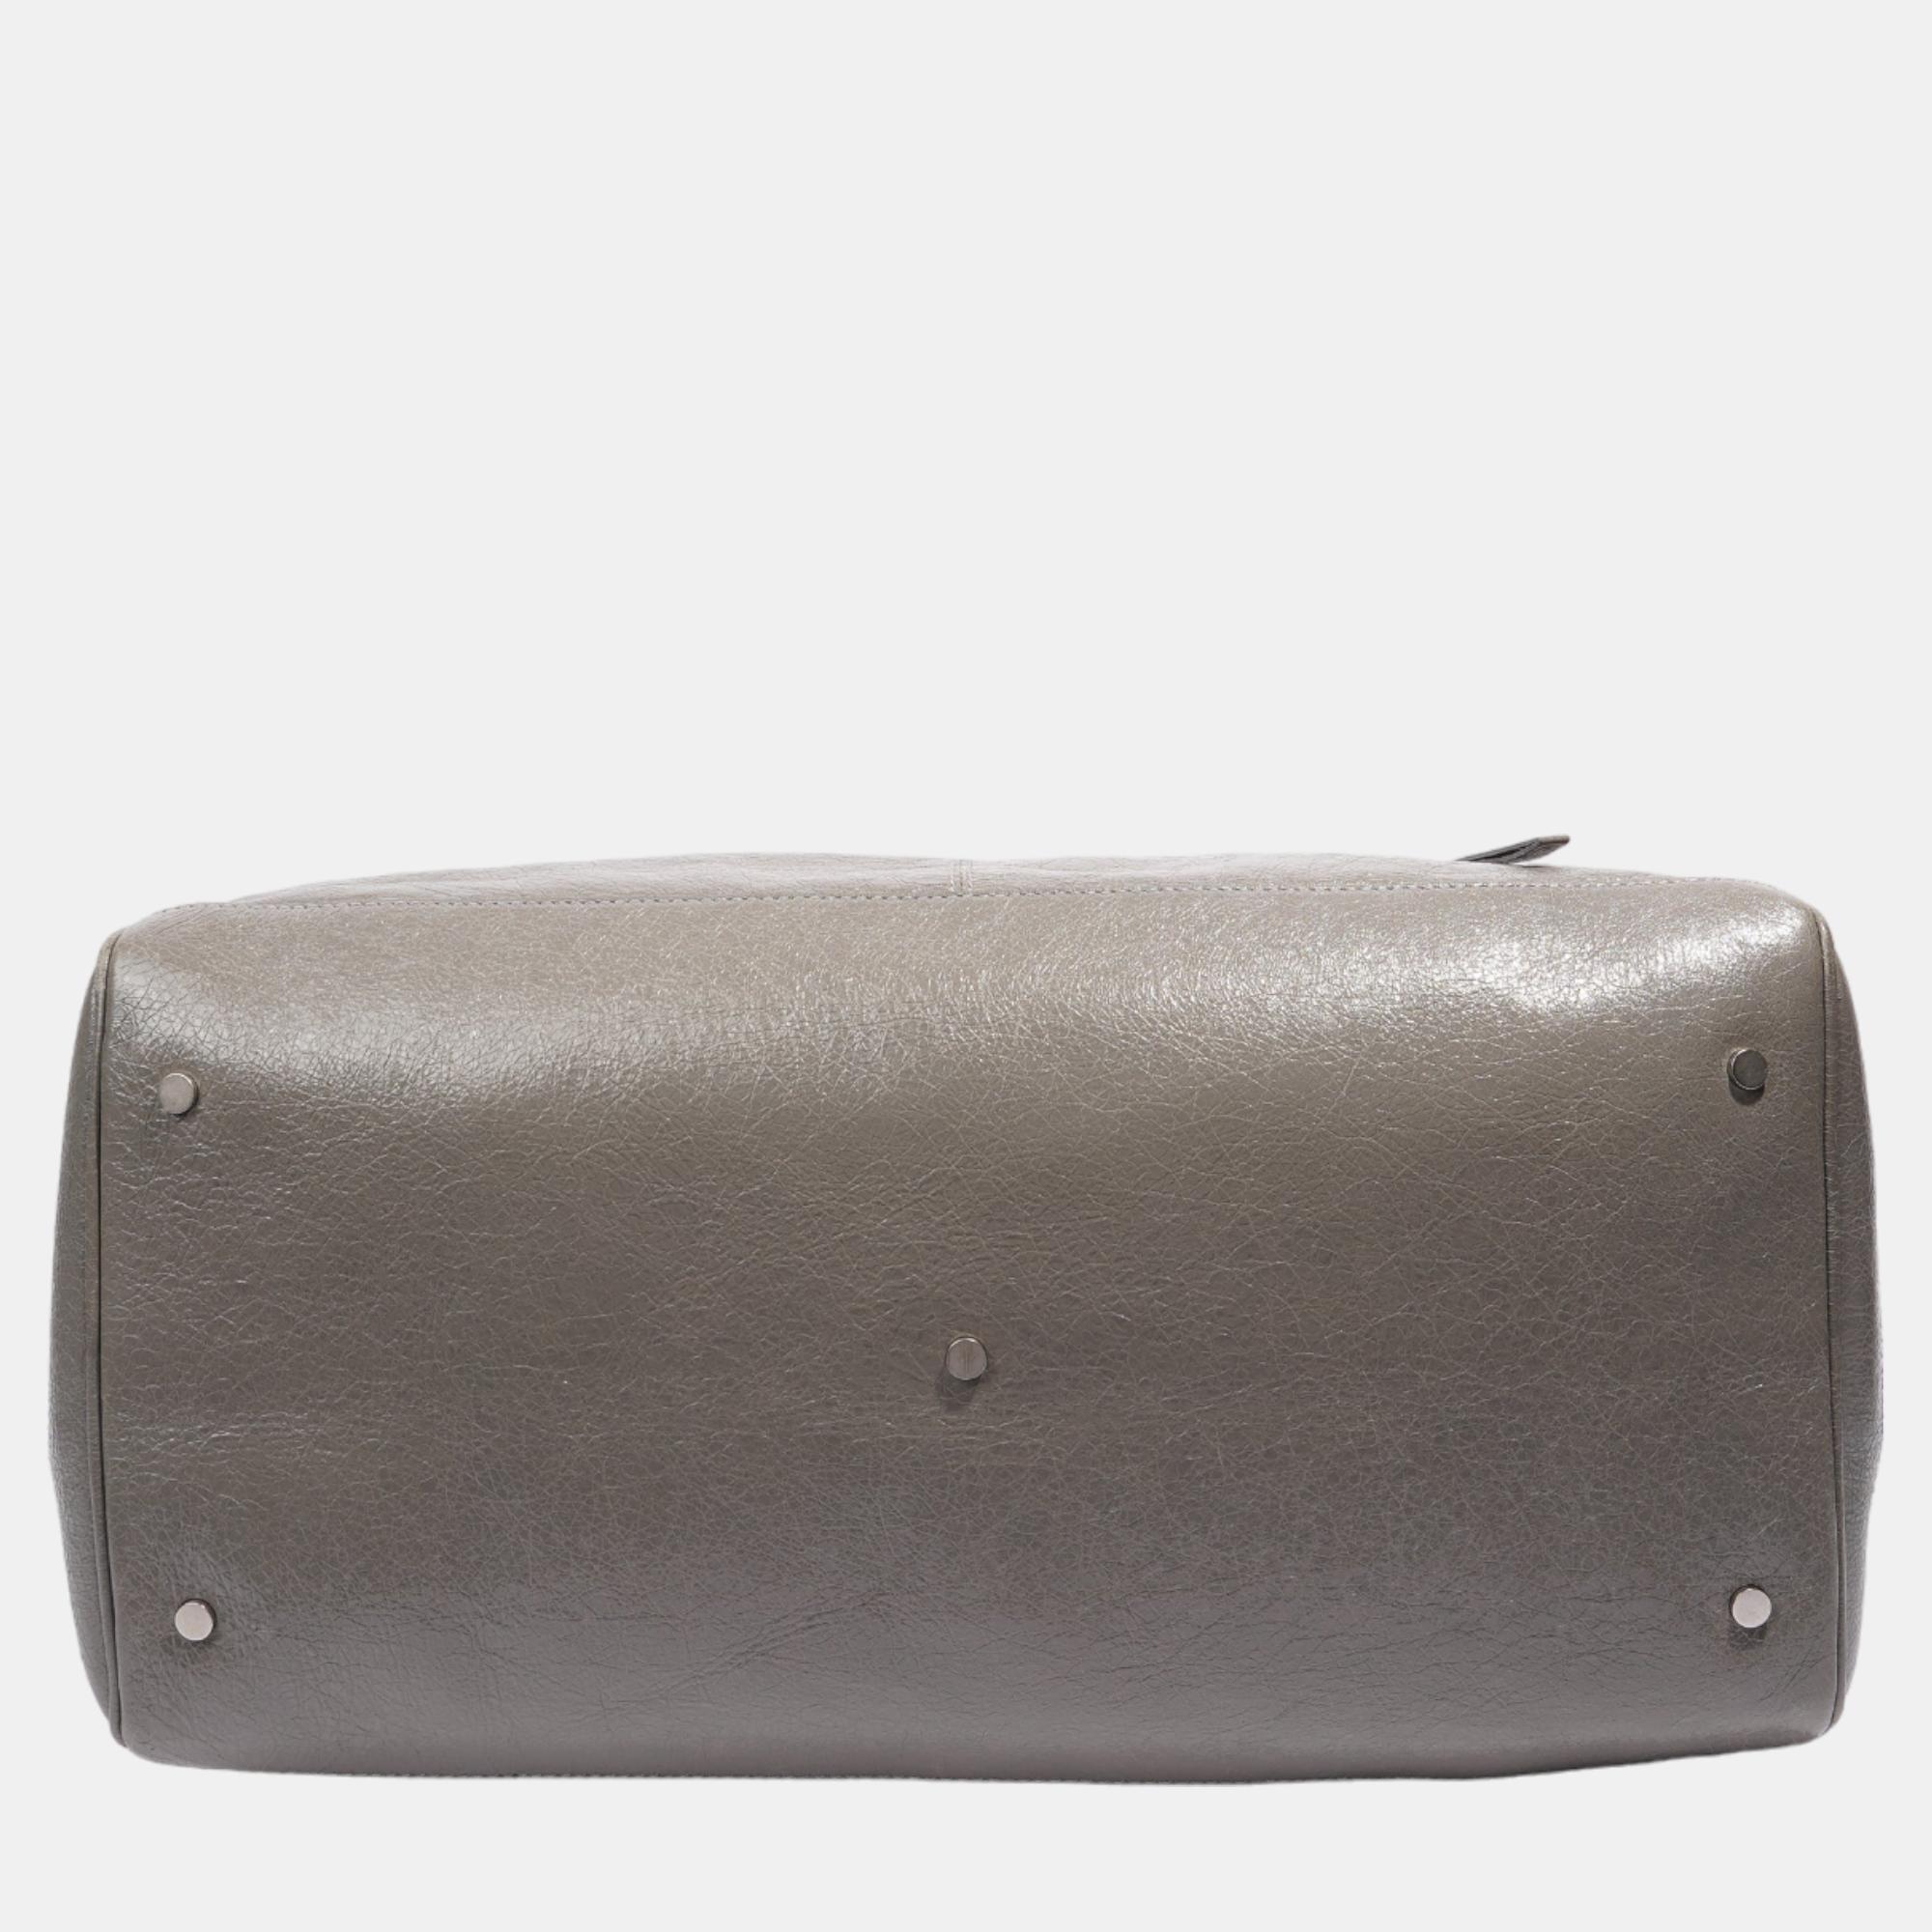 Balenciaga Squash Bag Grey Leather